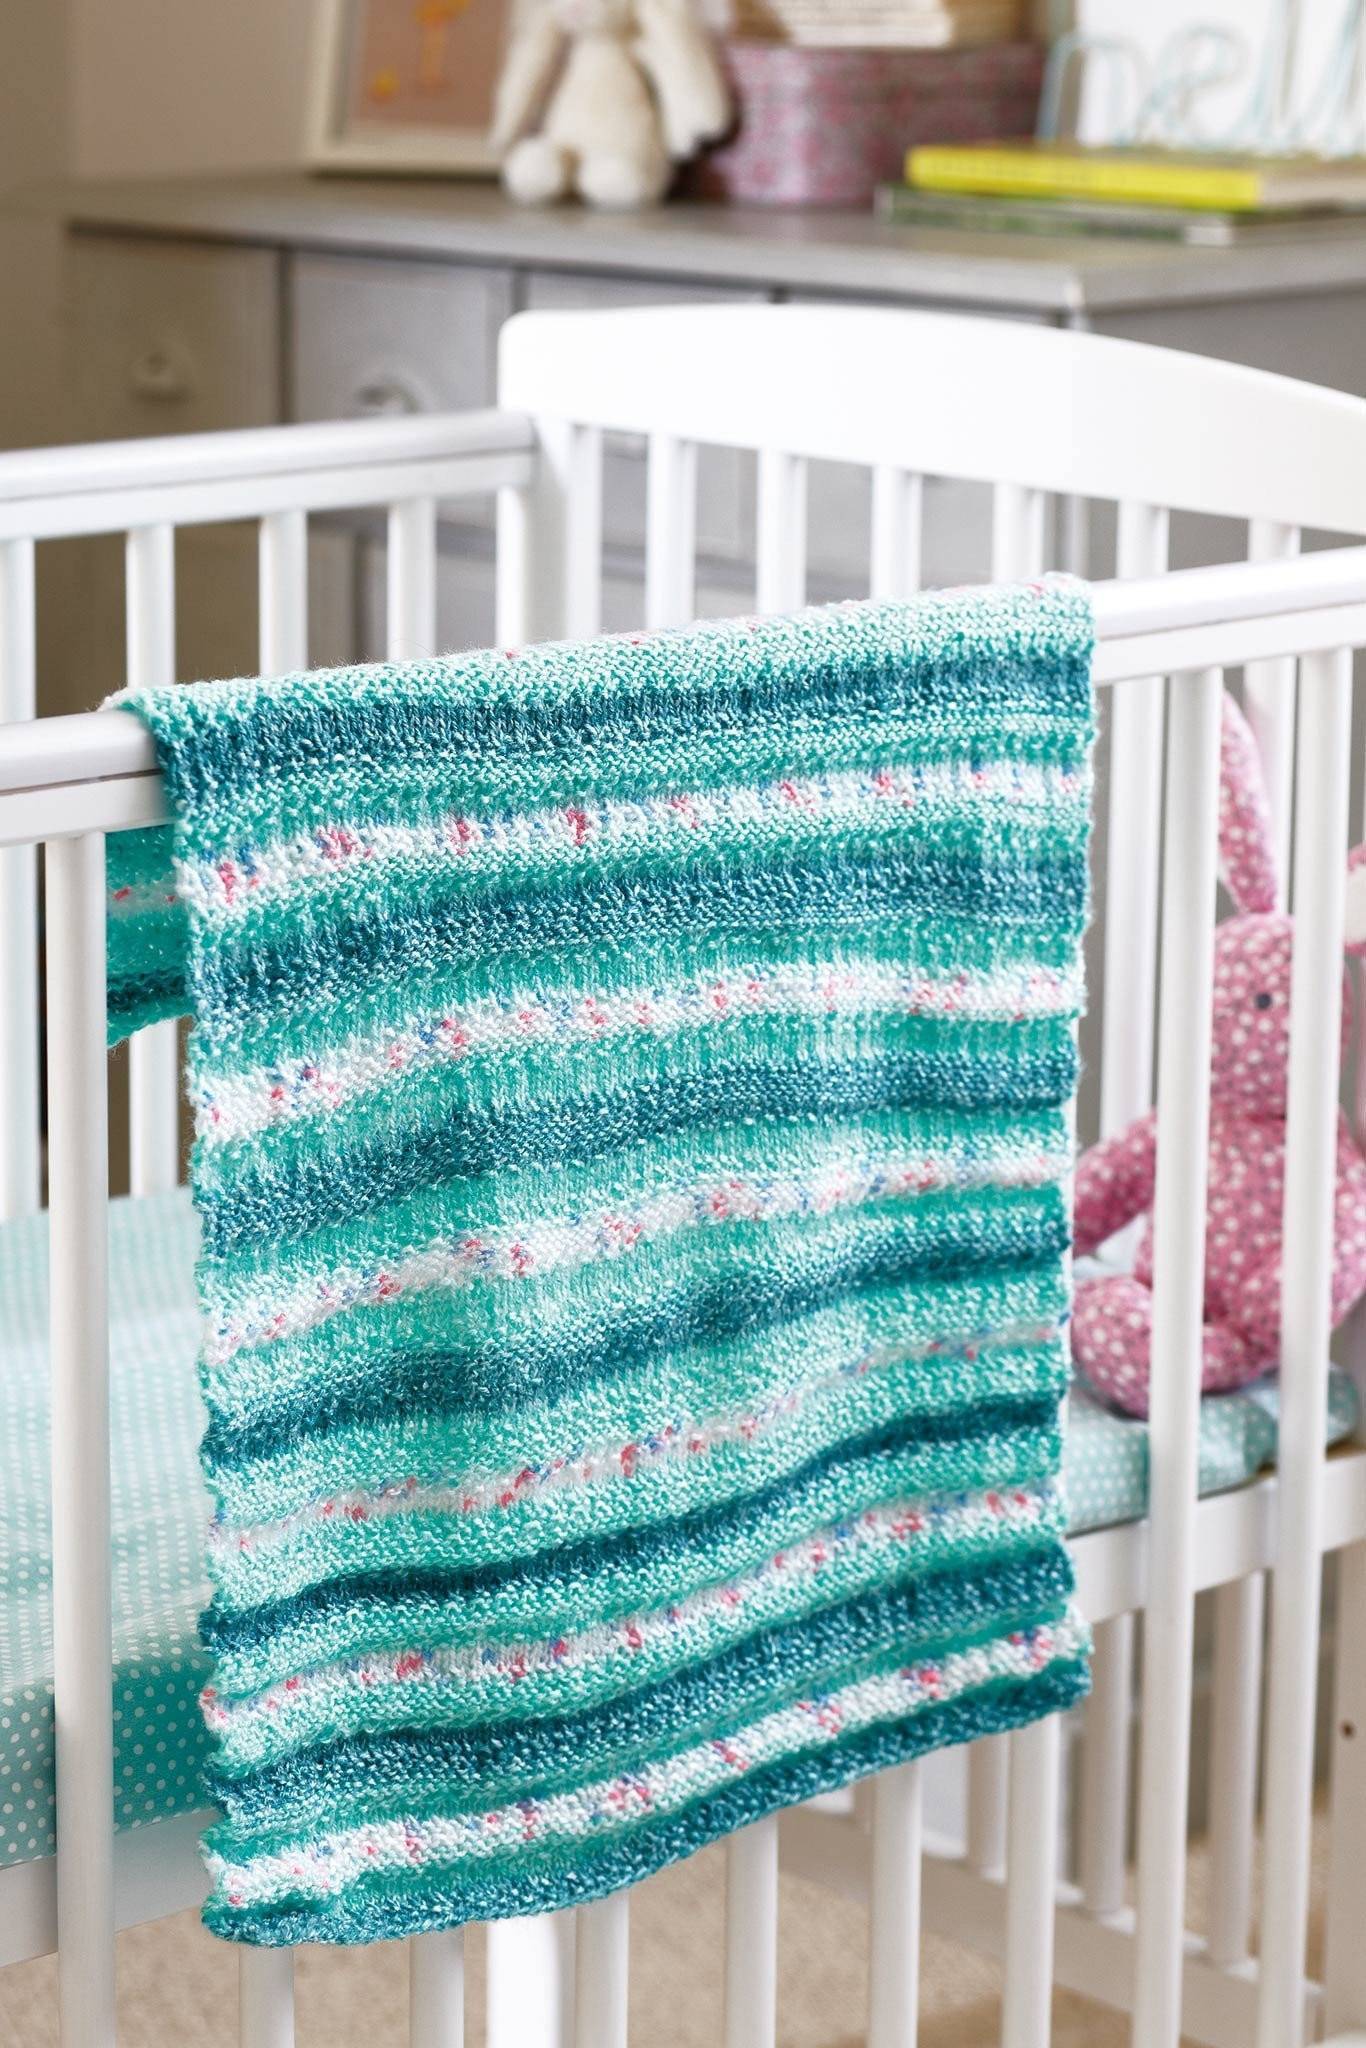 Striped Baby Blanket Knitting Pattern The Knitting Network